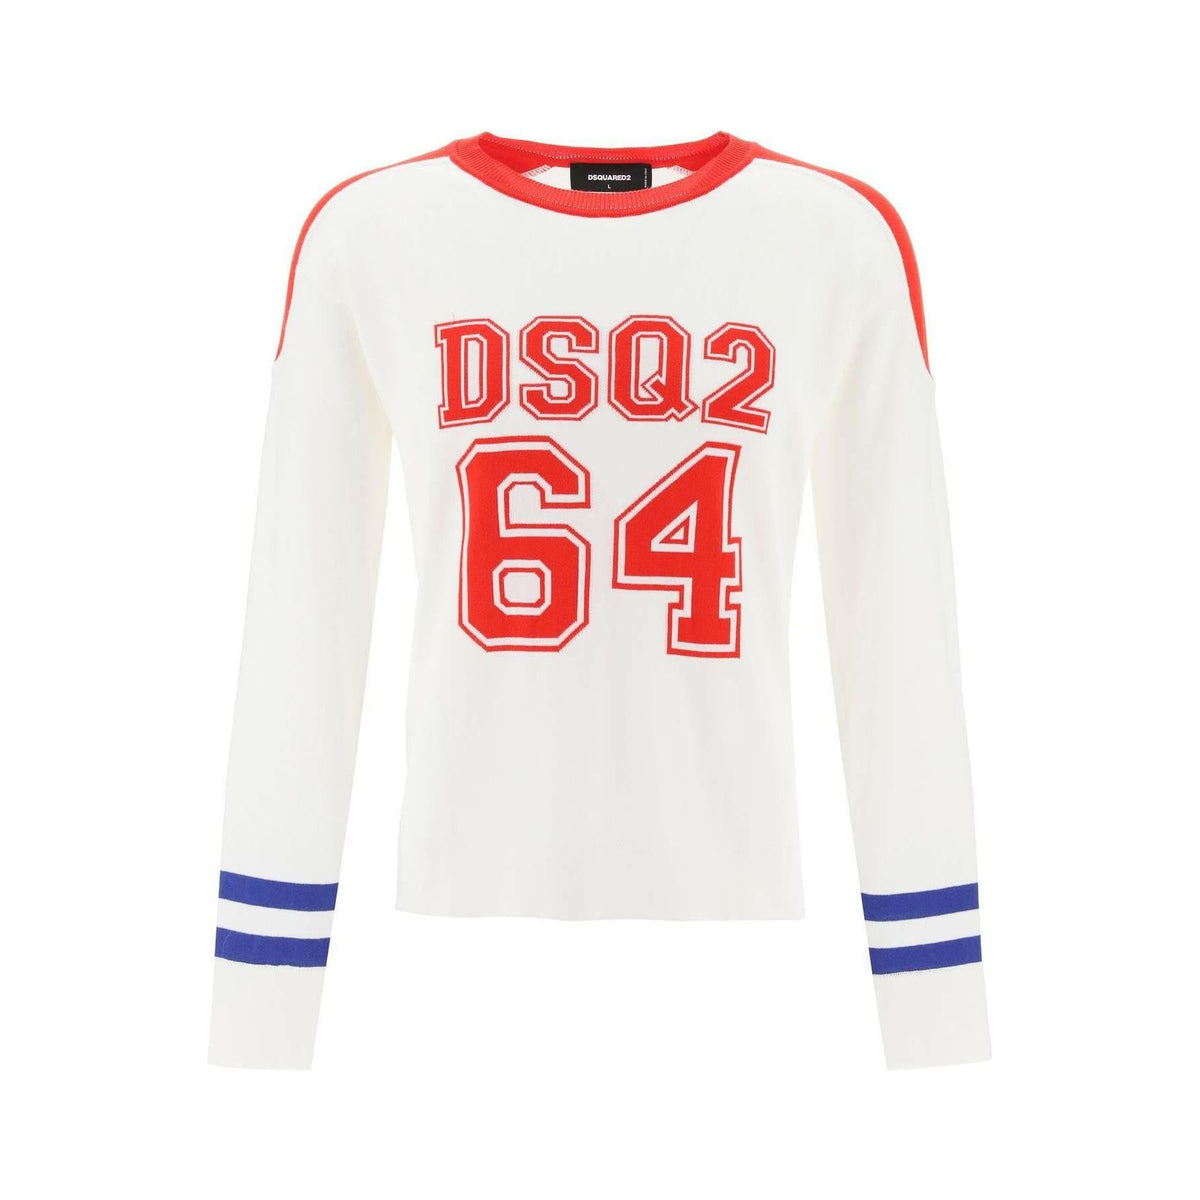 DSQUARED2 - Dsq2 64 Football Sweater - JOHN JULIA